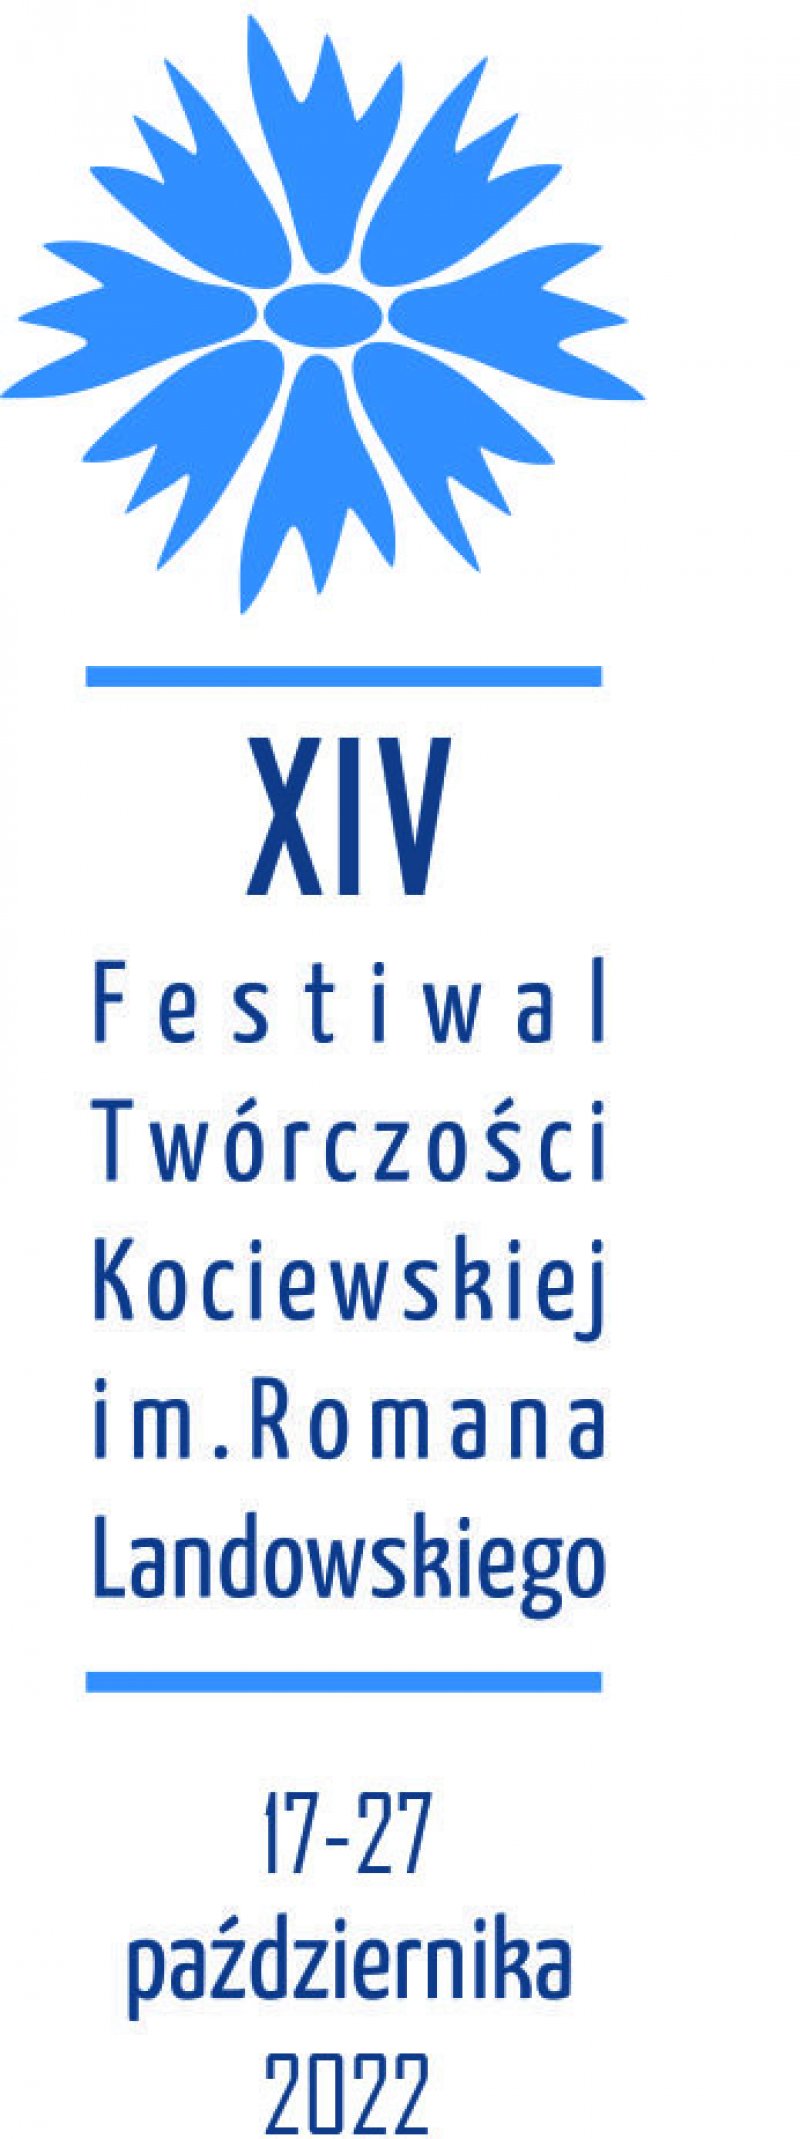 XIV FTK logo pion.jpg